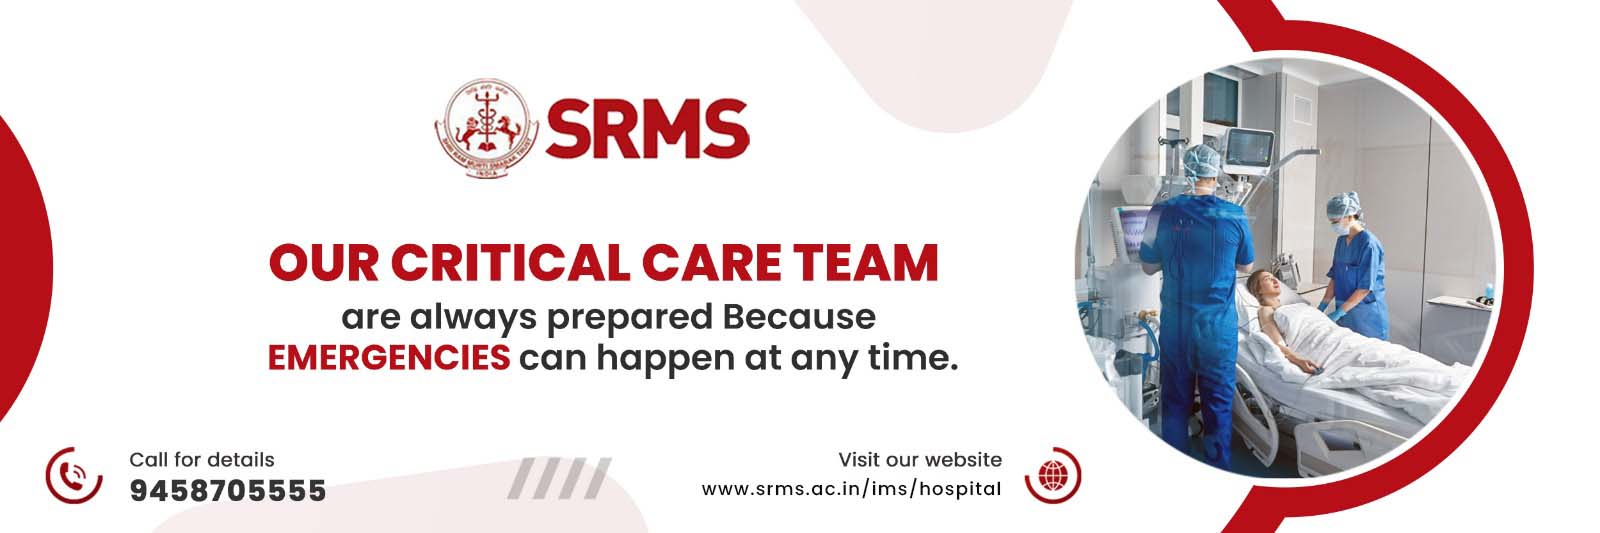 SRMS-IMS-CRITICAL-CARE-TEAM-min